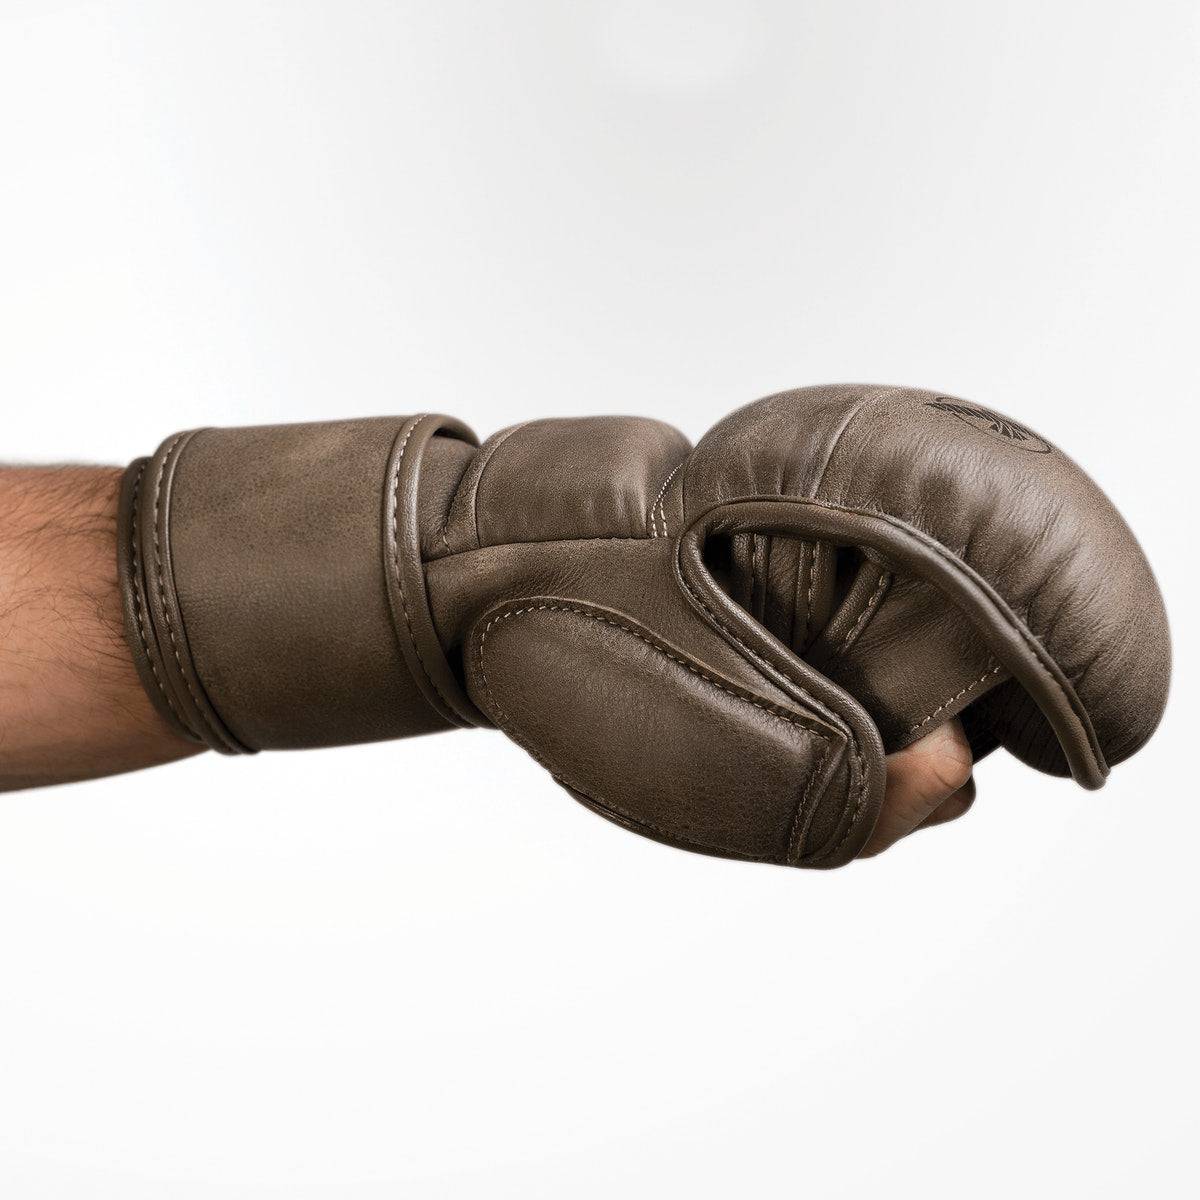 Hayabusa | Hybrid Gloves - T3 LX - 7oz - XTC Fitness - Exercise Equipment Superstore - Canada - Hybrid Gloves